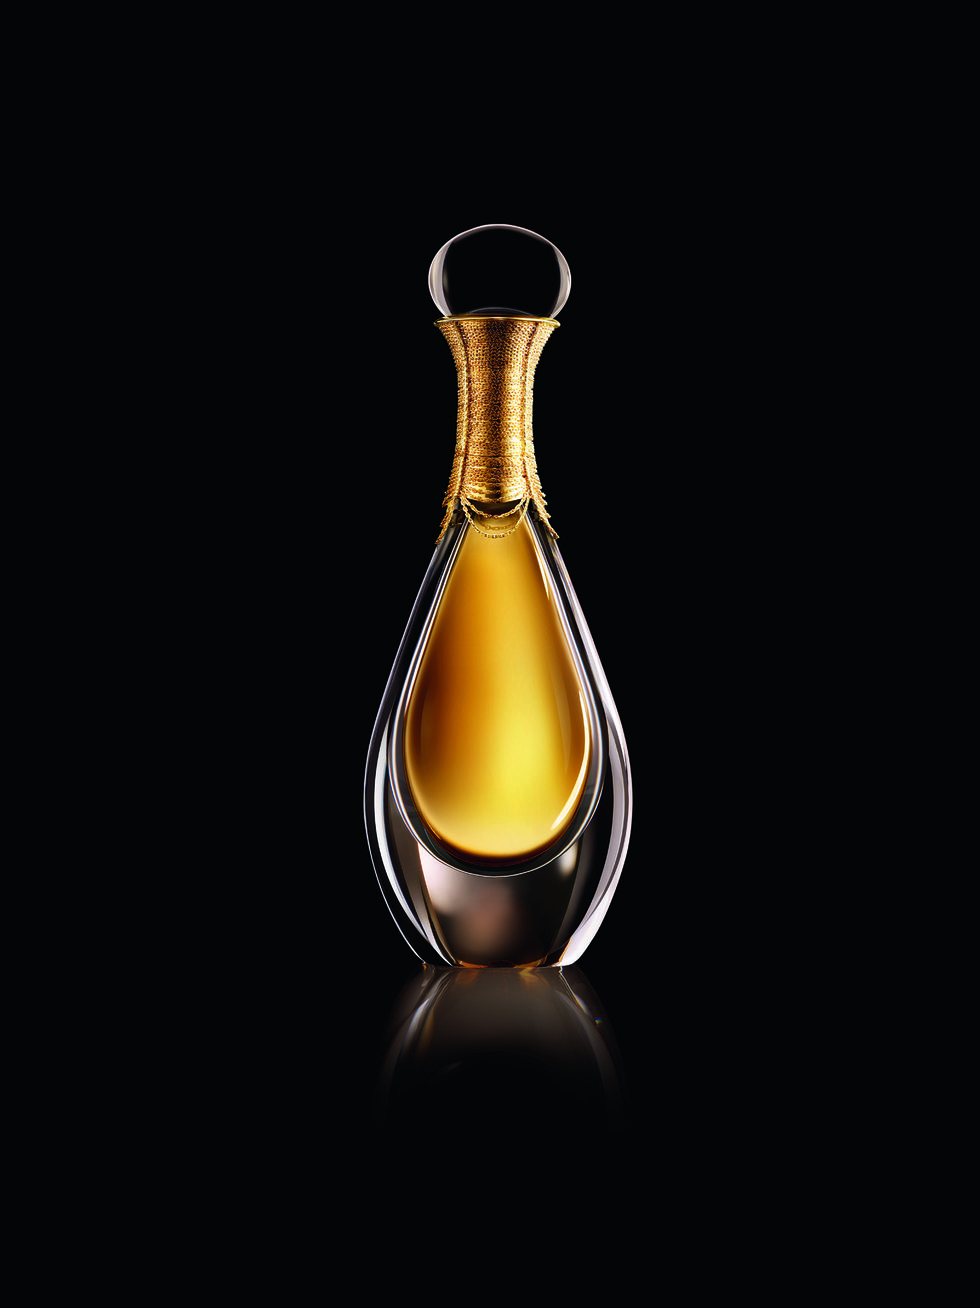 Perfume, Still life photography, Product, Glass bottle, Decanter, Liquid, Bottle, 